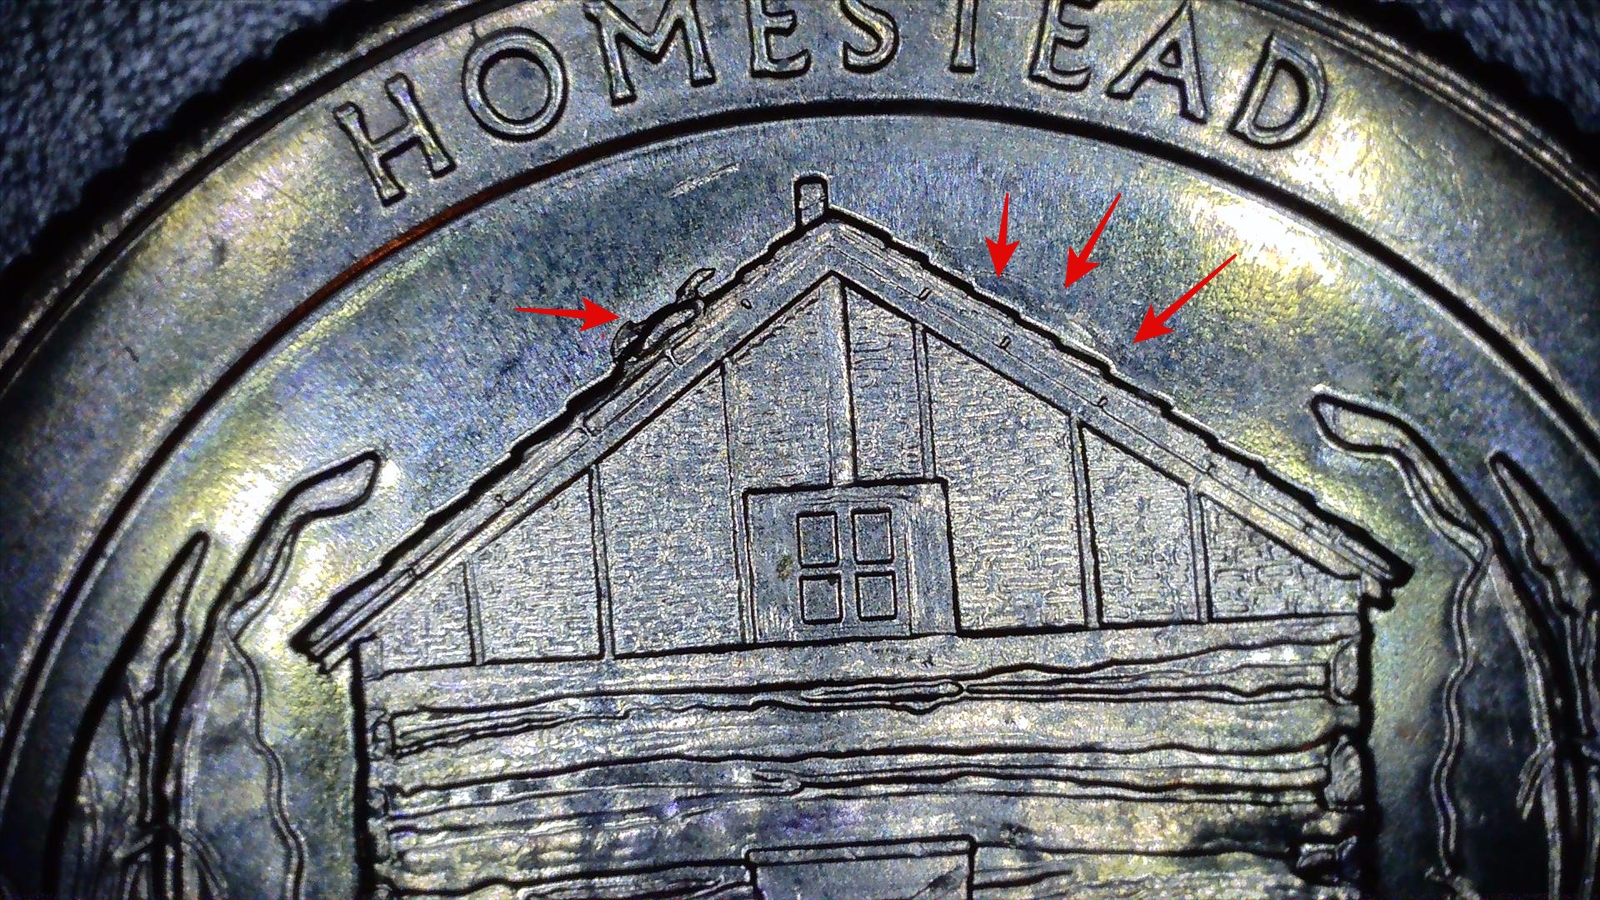 2015 D Homestead SnORf Quarter rev.jpg